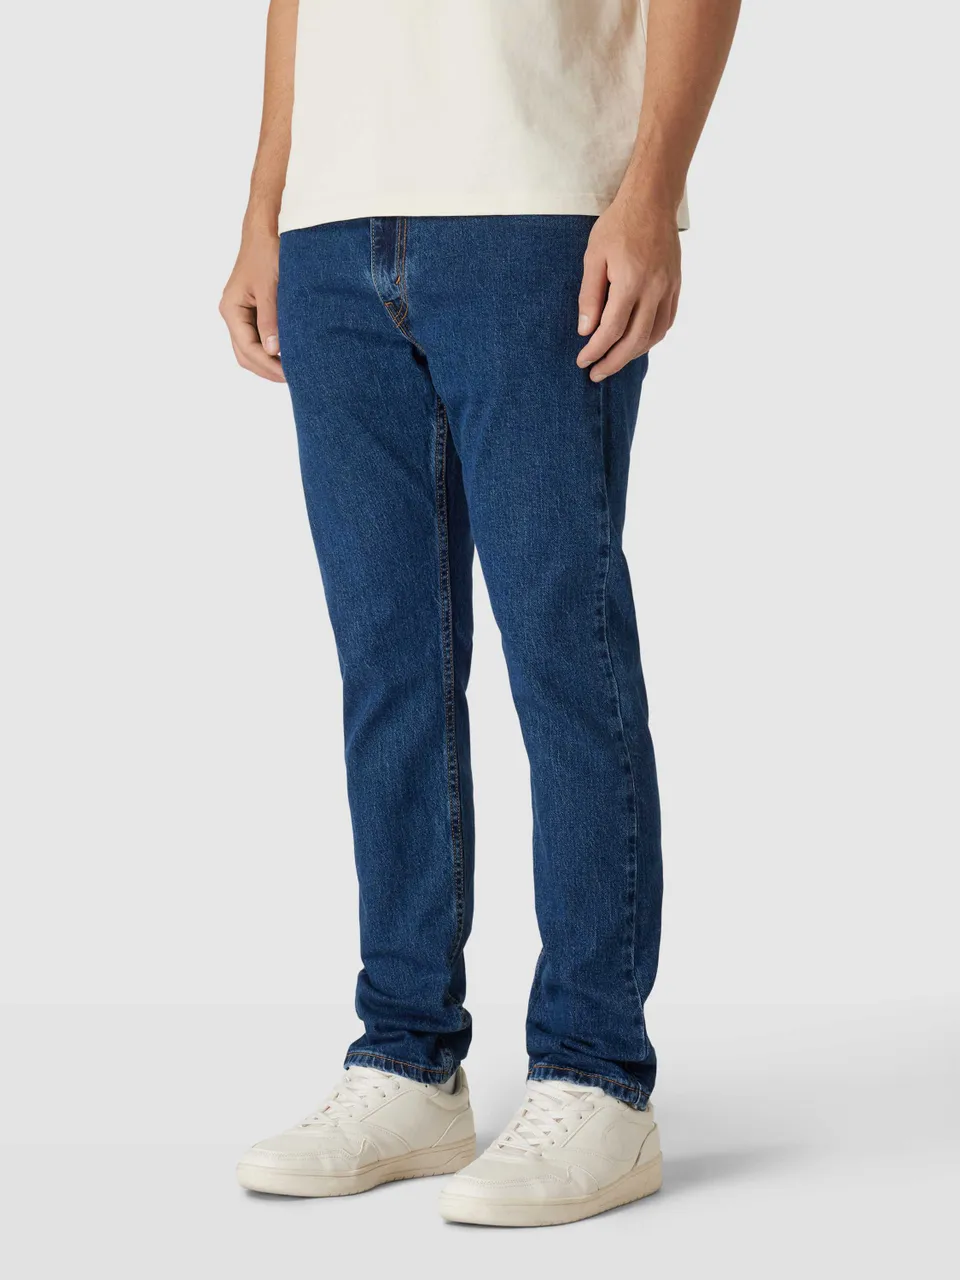 Jeans im 5-Pocket-Design Modell "502 DOLLAR BILLS"